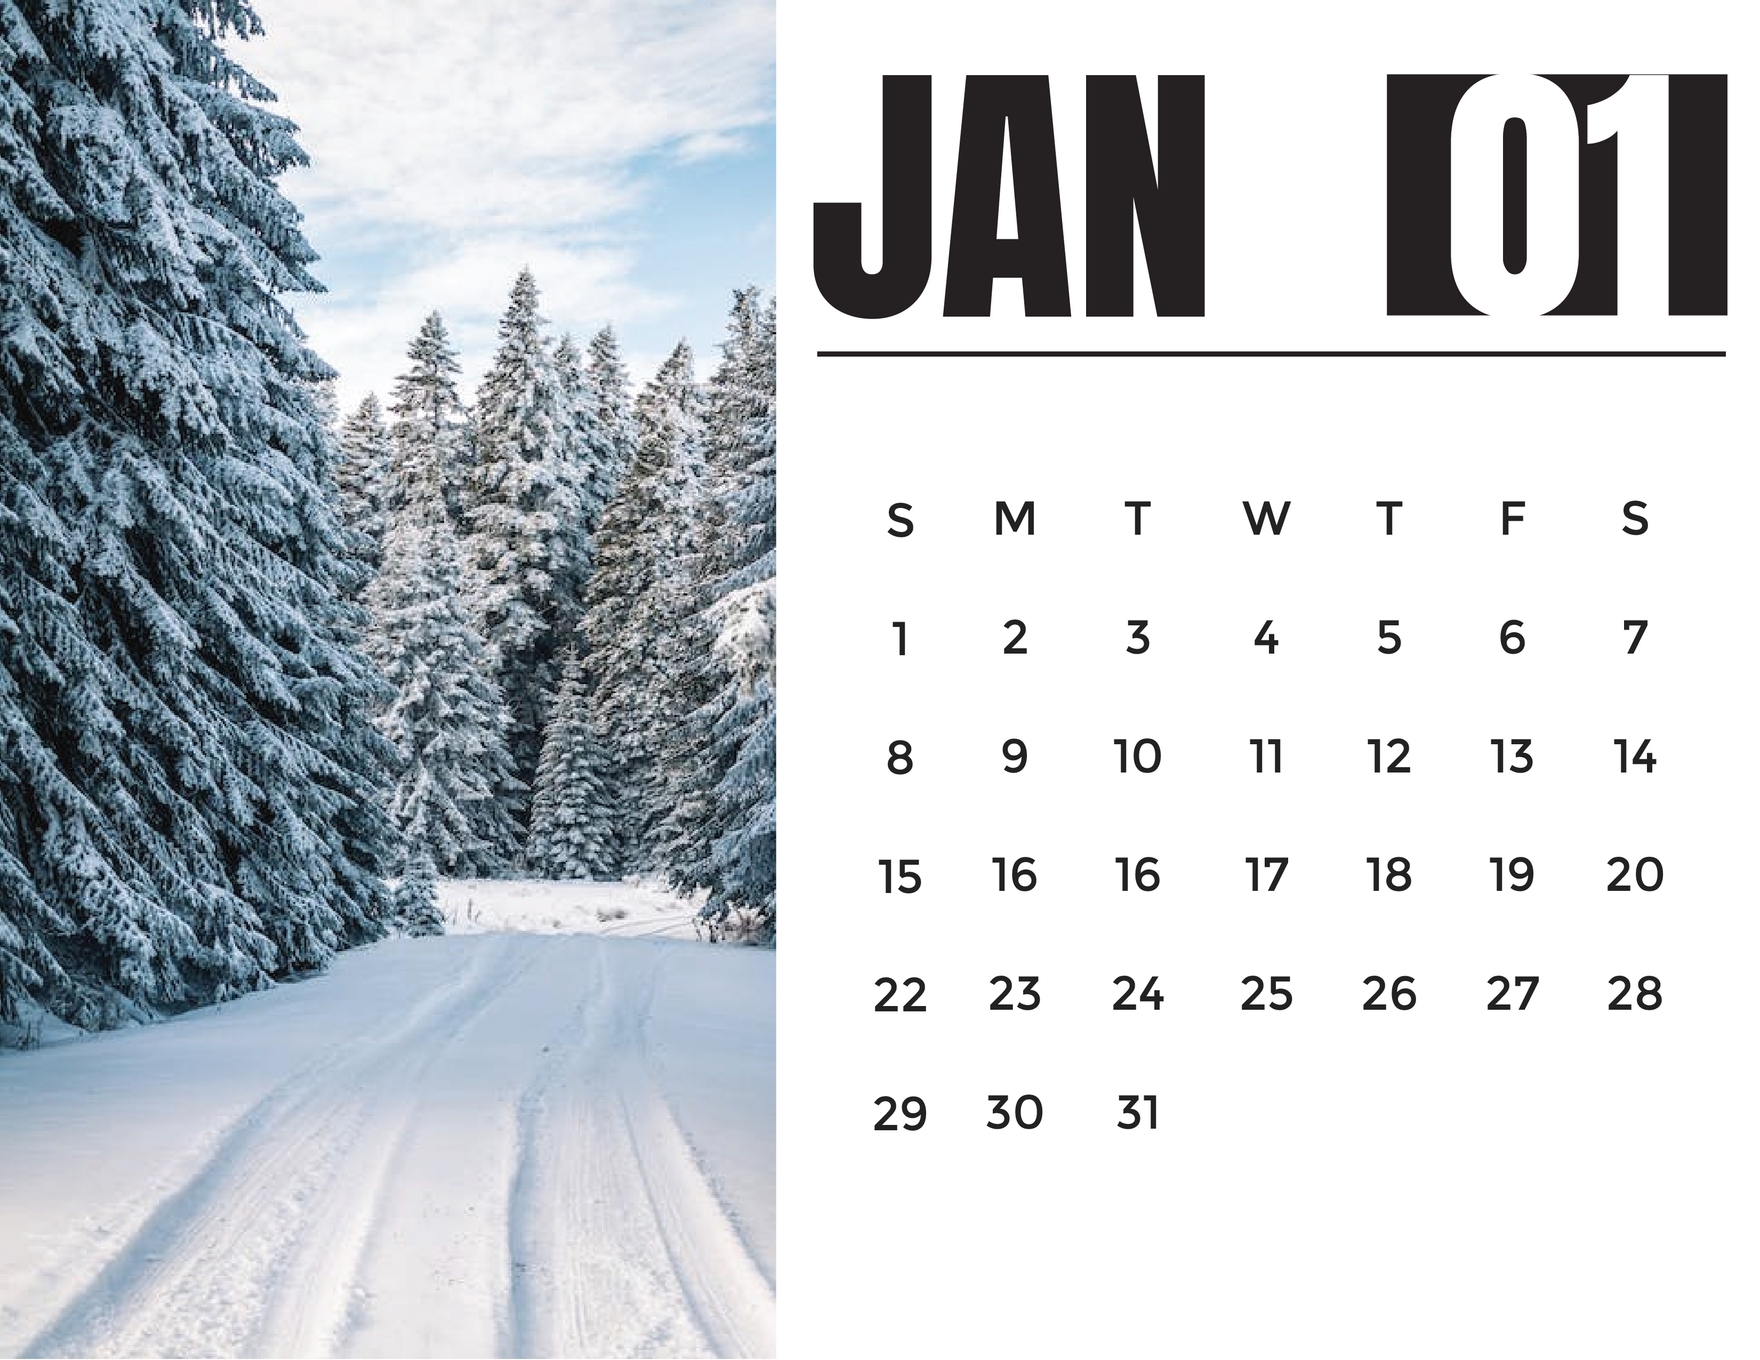 2023 Photo Calendar Template - Download in Word, Illustrator, PSD